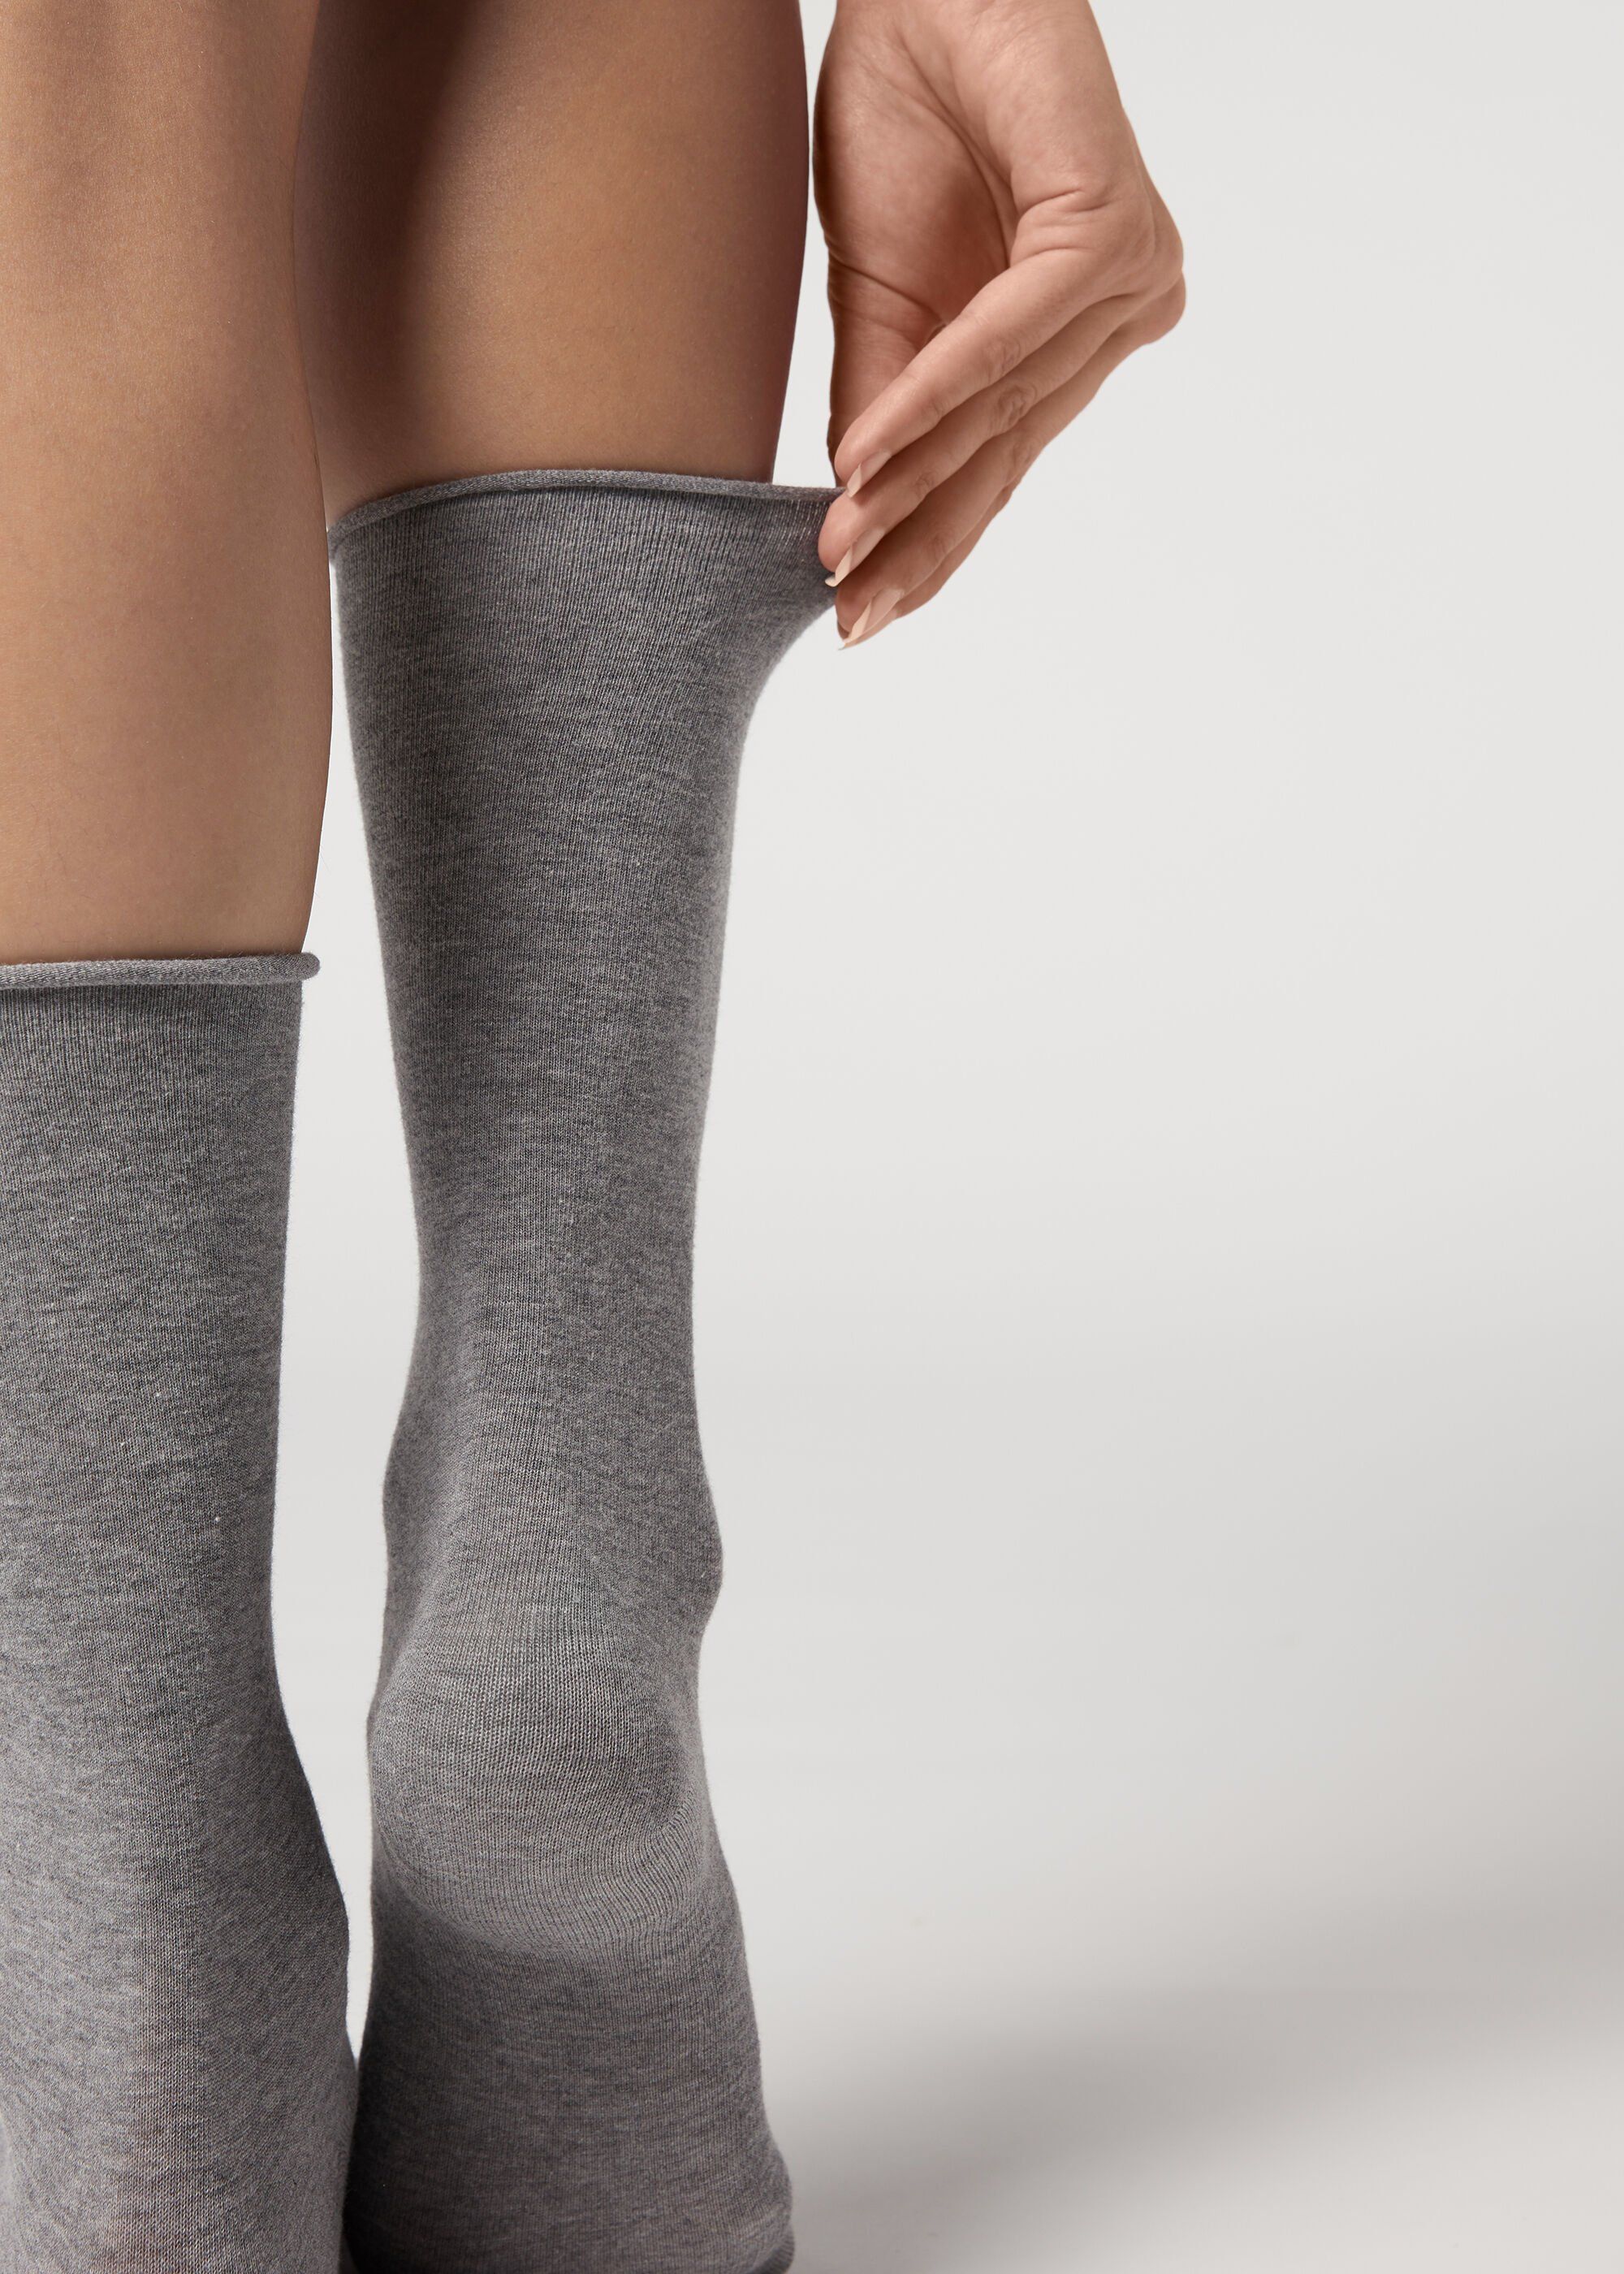 Women’s Smooth Cotton Mid-Calf Socks | Calzedonia US